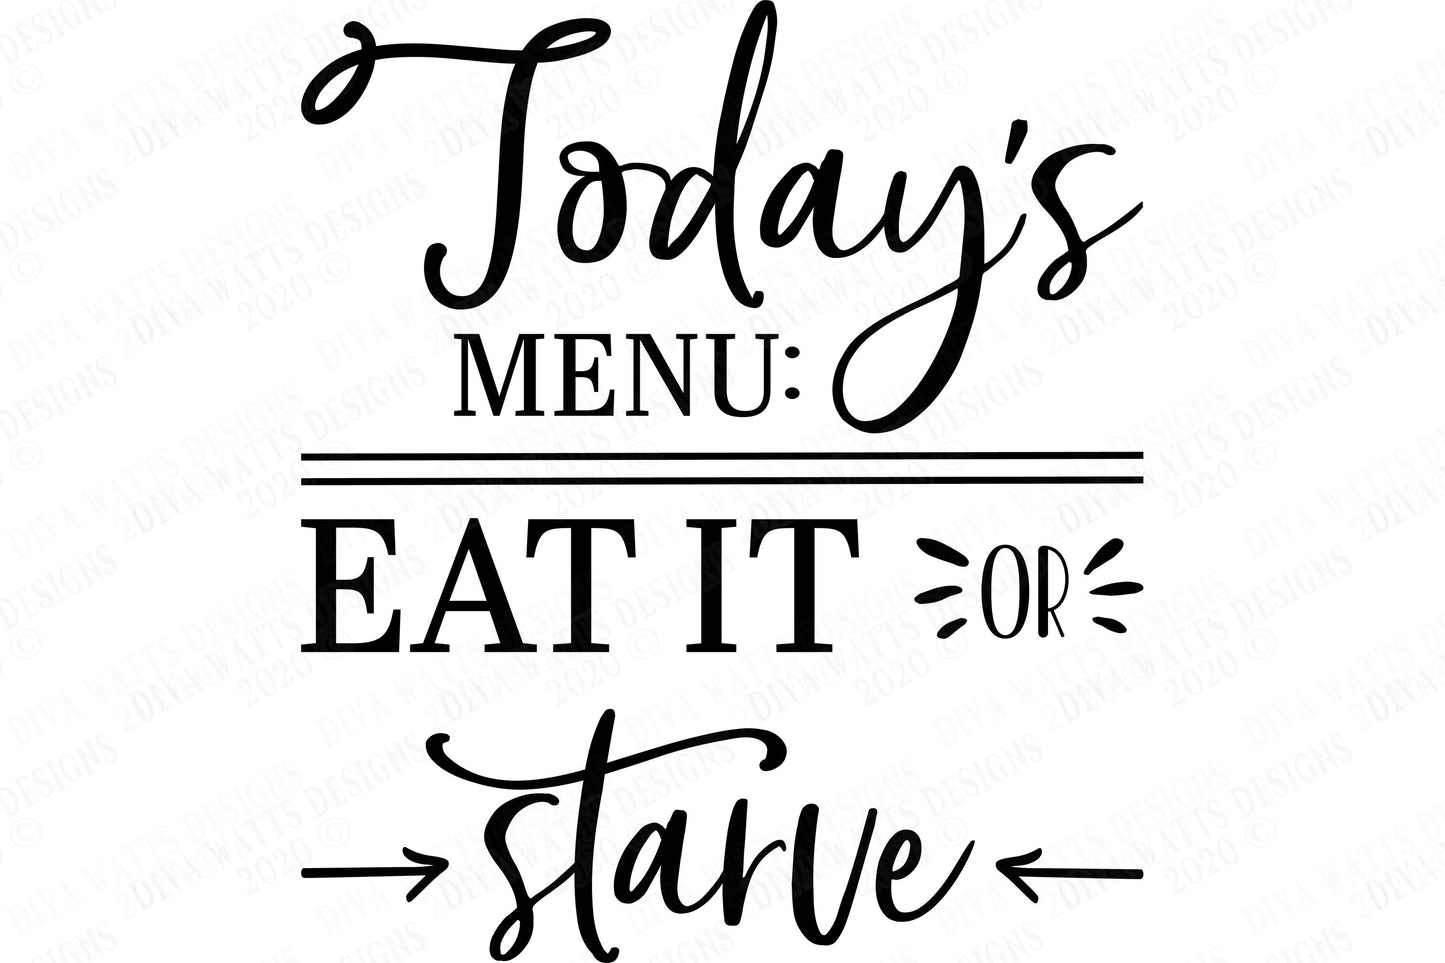 SVG | Today's Menu Eat It Or Starve | Cutting File |Kitchen Humor Sign | Farmhouse Rustic | Vinyl Stencil | dxf eps ai | Vinyl Stencil HTV